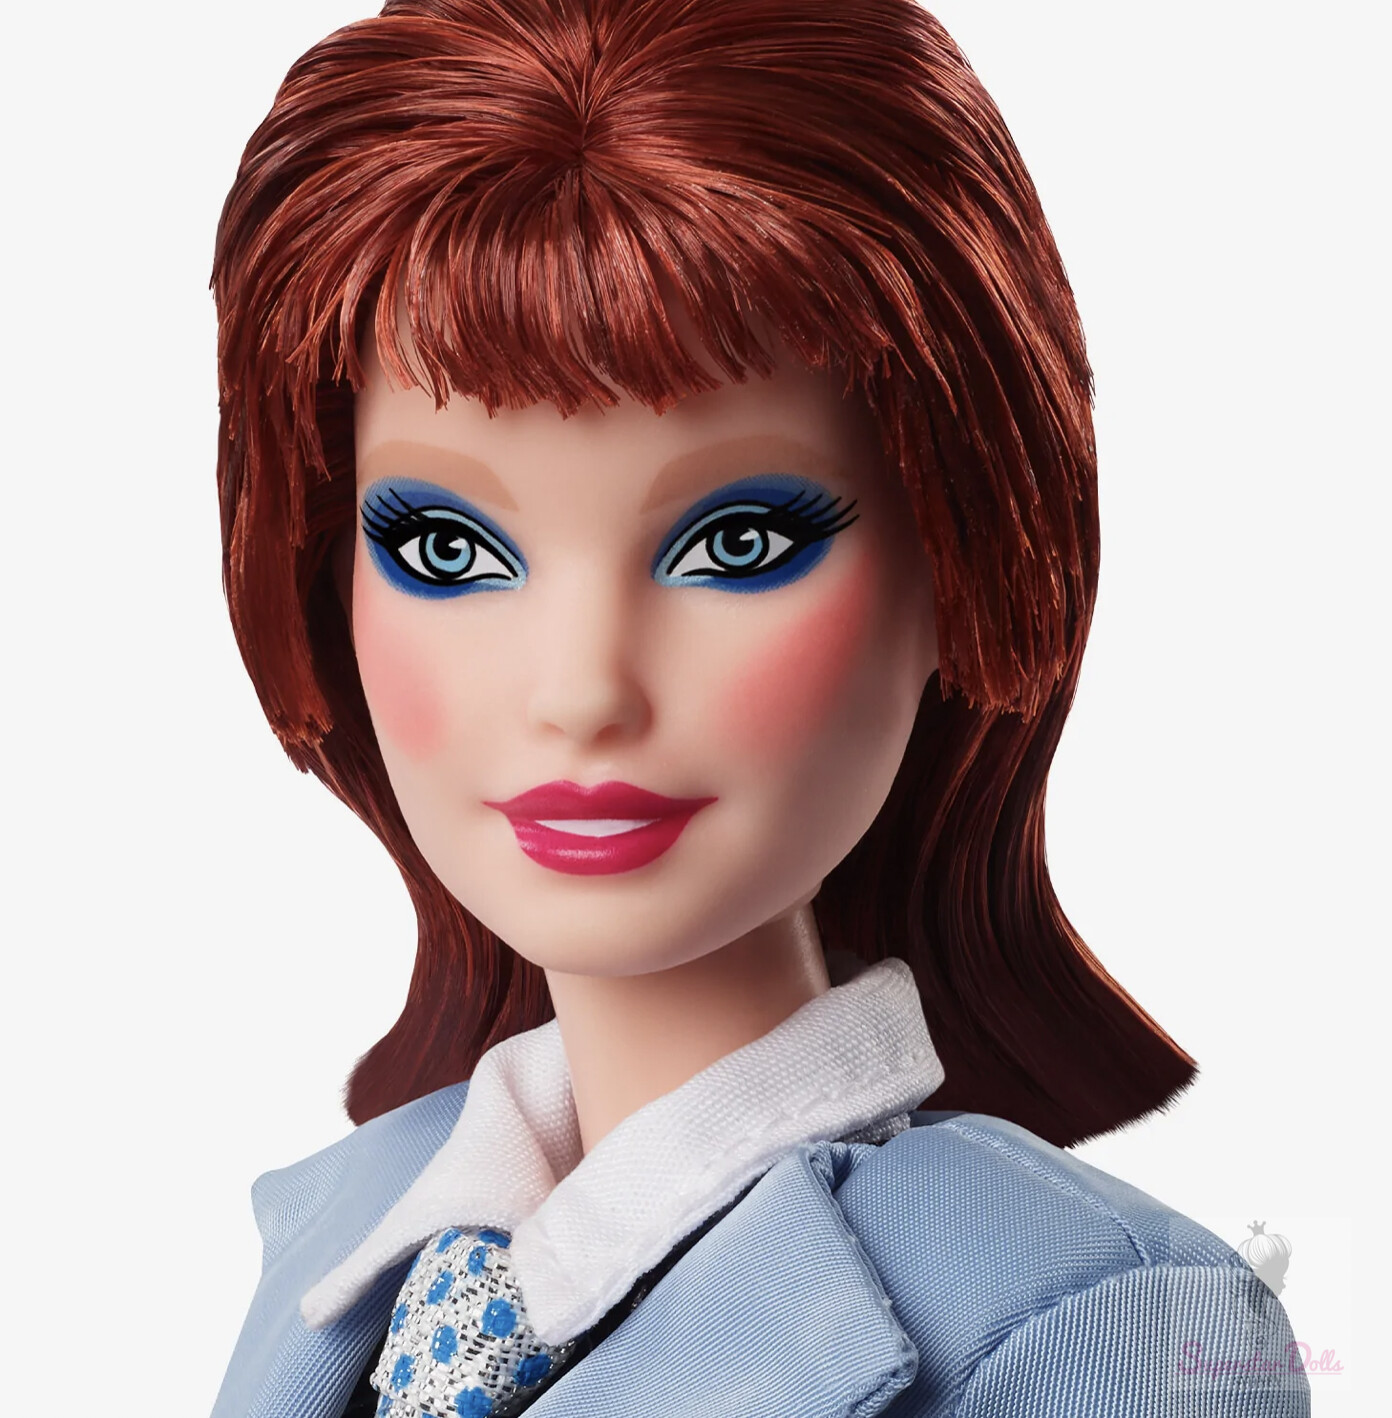 2022 Gold Label: David Bowie #2 Barbie Doll